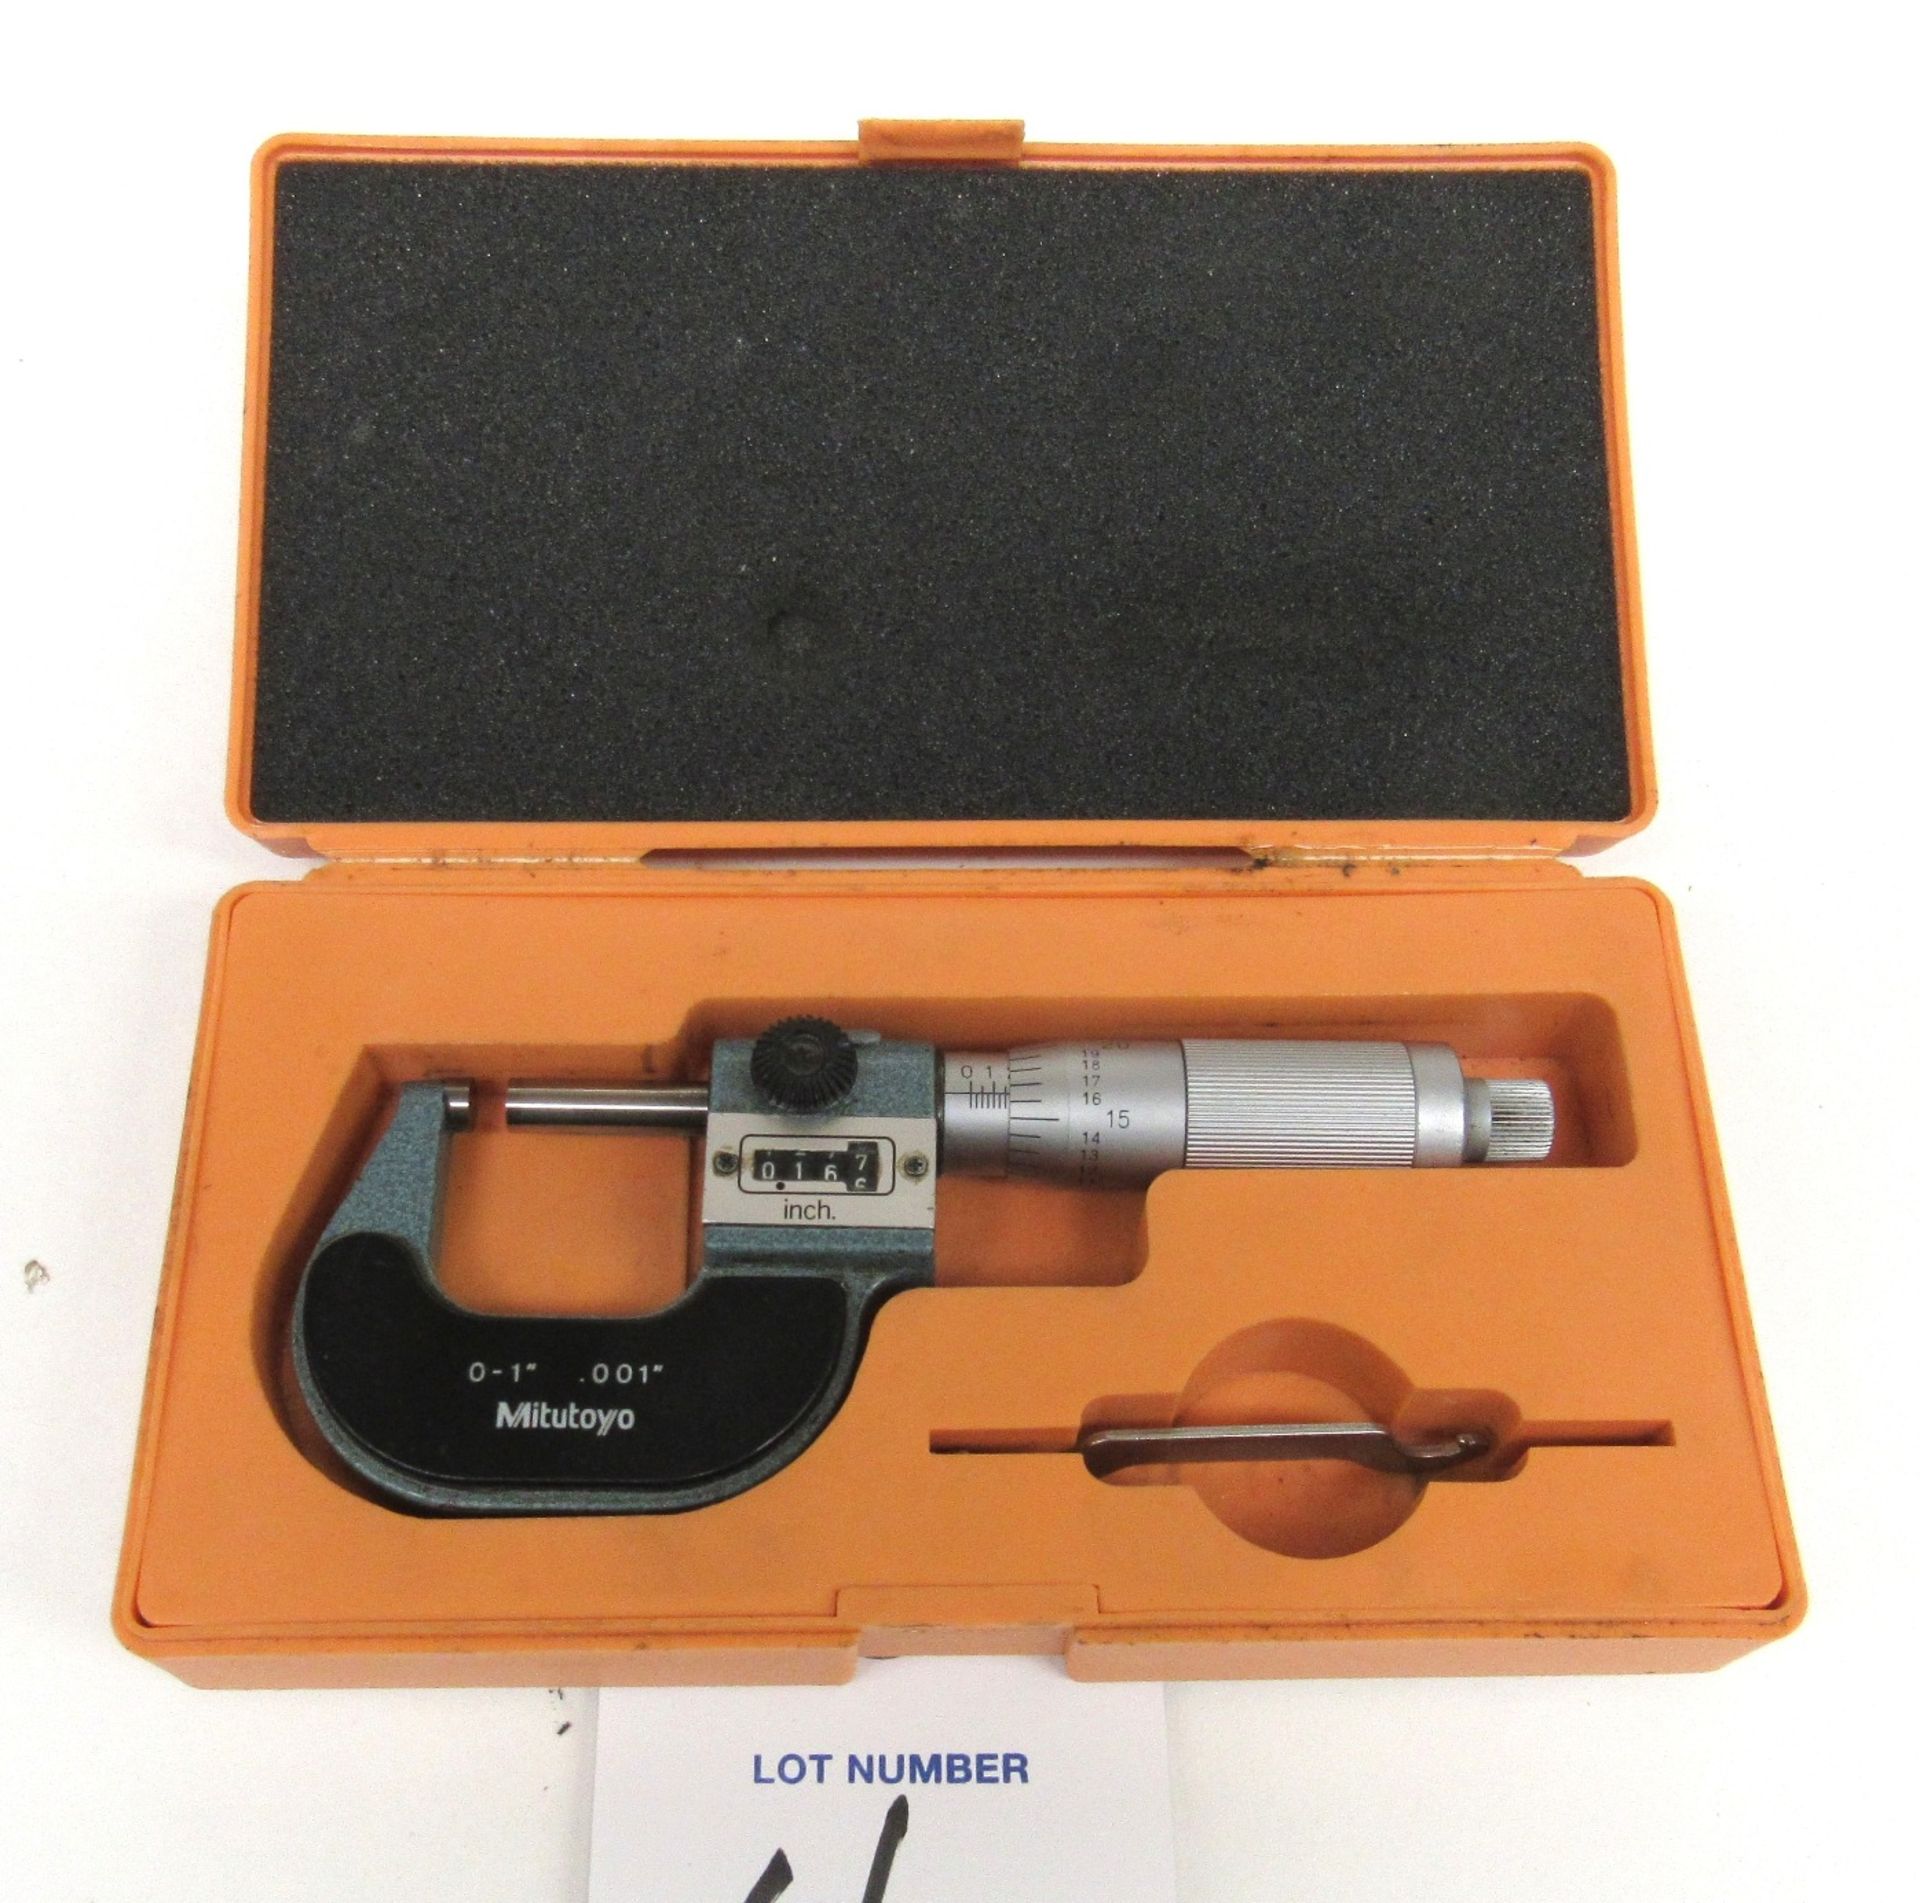 Mitutoyo 0-1" Micrometer